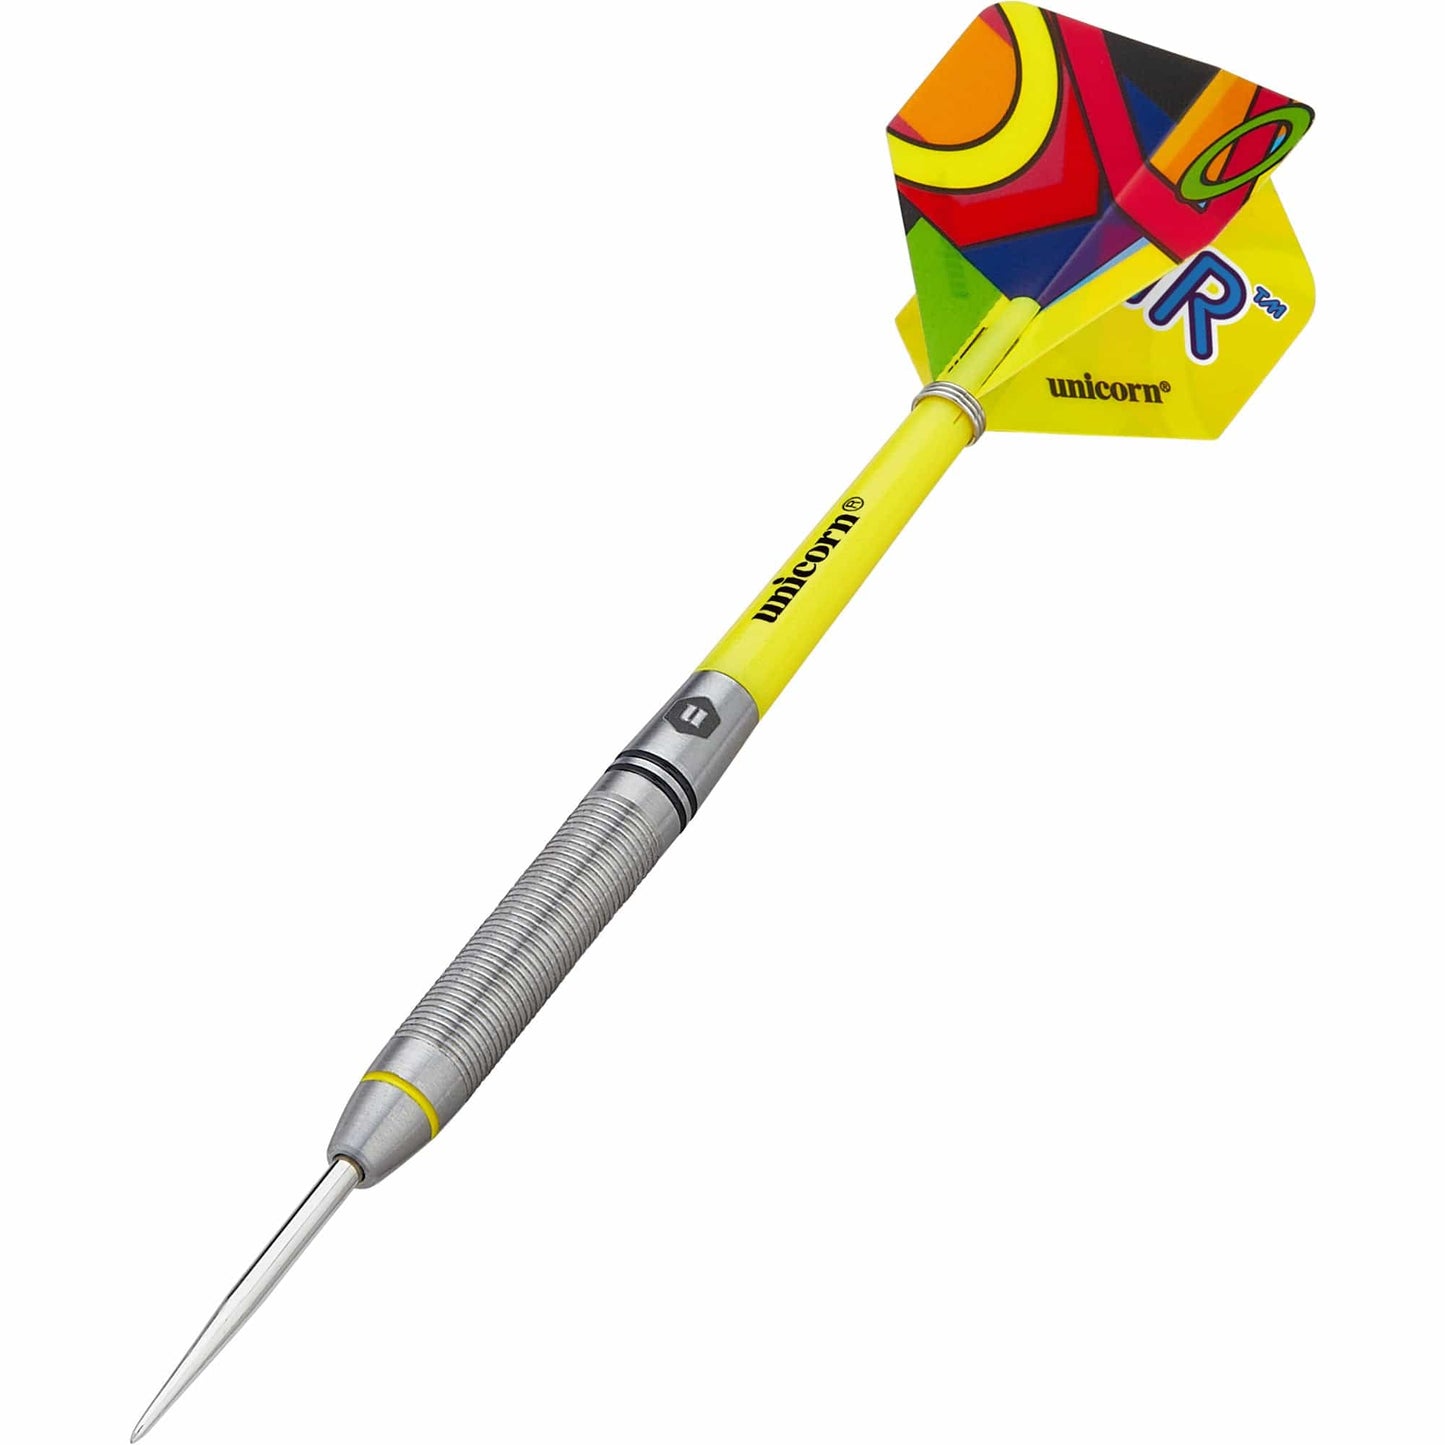 Unicorn Flair Darts - Steel Tip - Style 5 - Micro Grip 24g